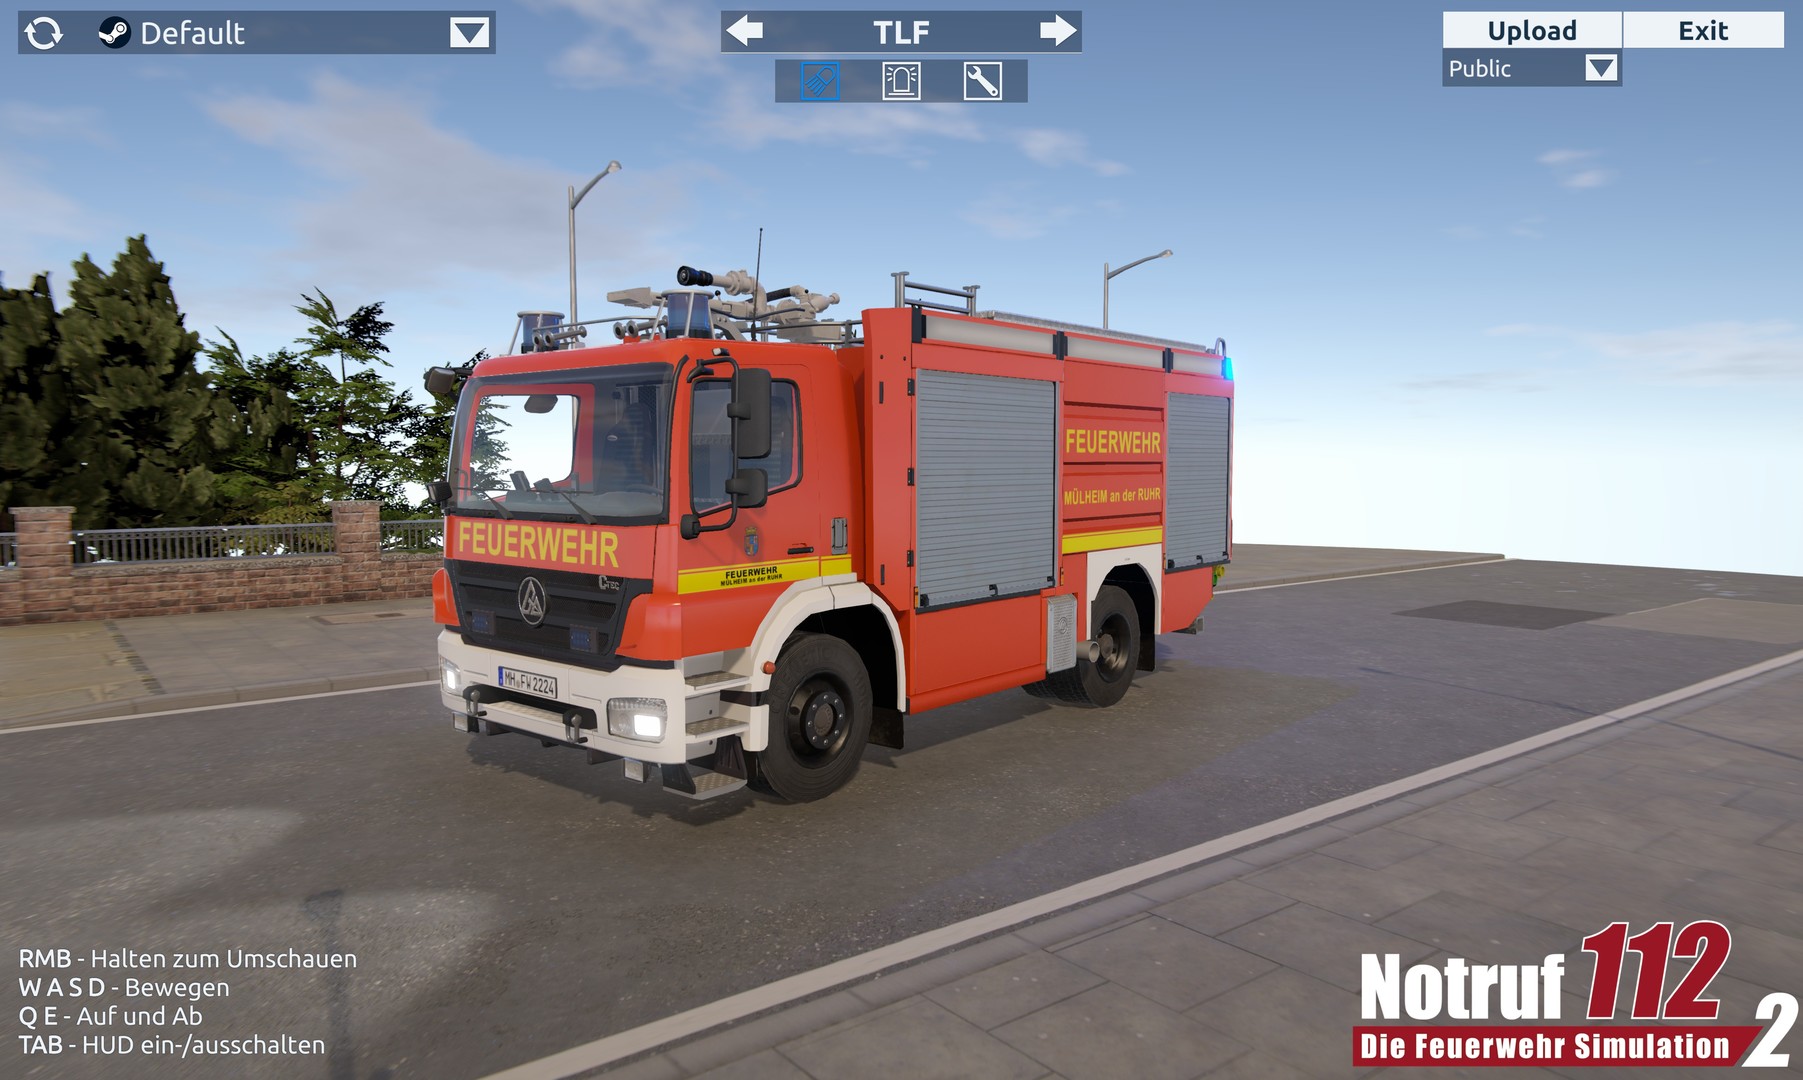 Notruf 112 - Die Feuerwehr Simulation 2: Showroom game revenue and